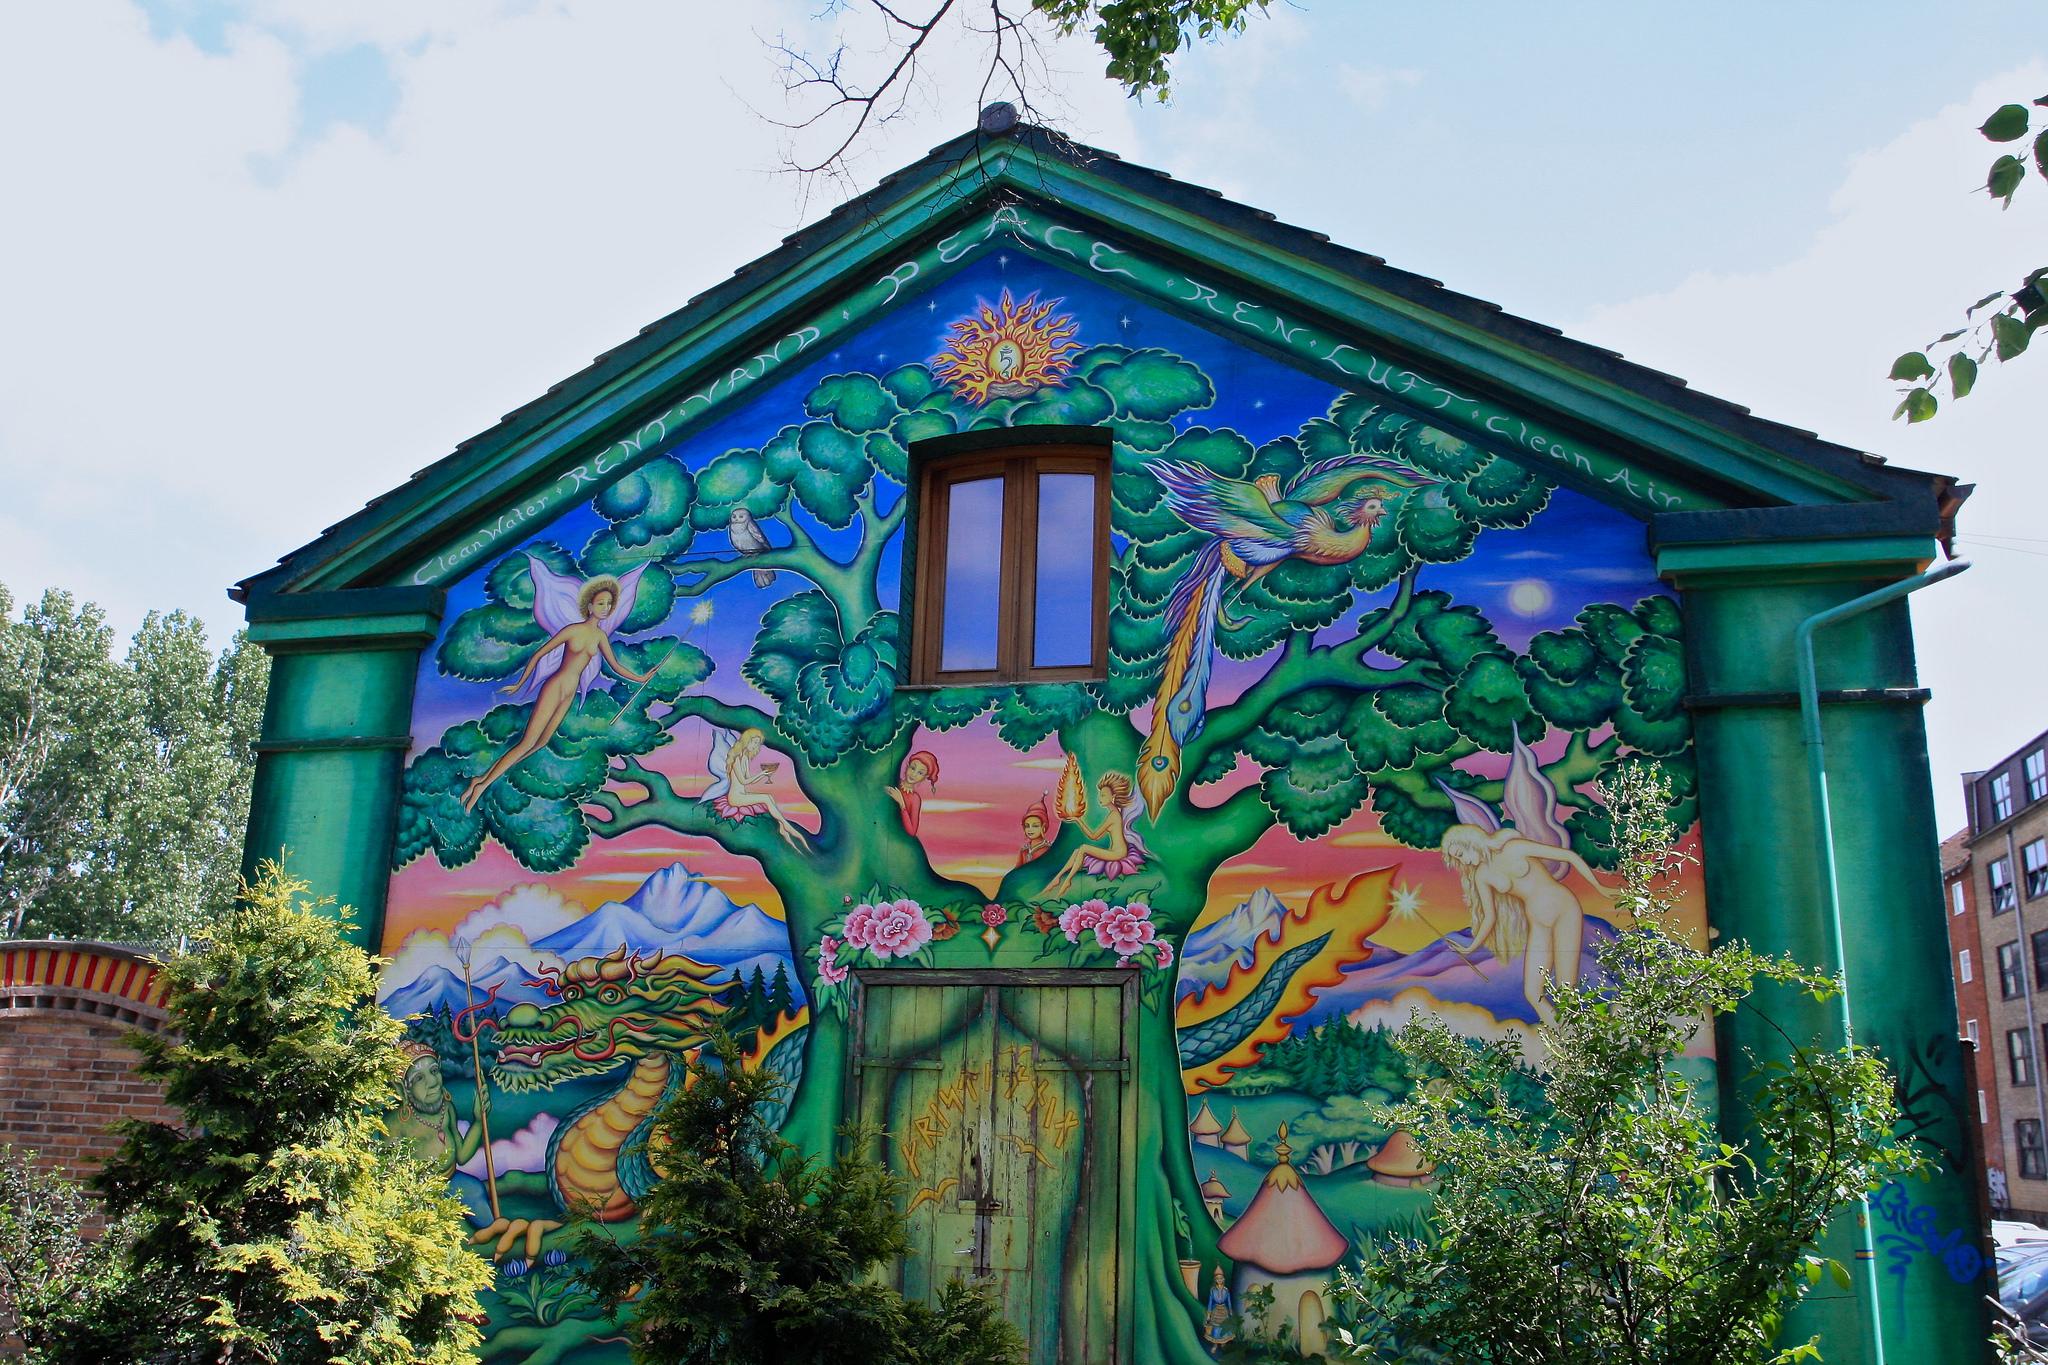 A painted mural at the entrance to autonomous neighbourhood Christiana